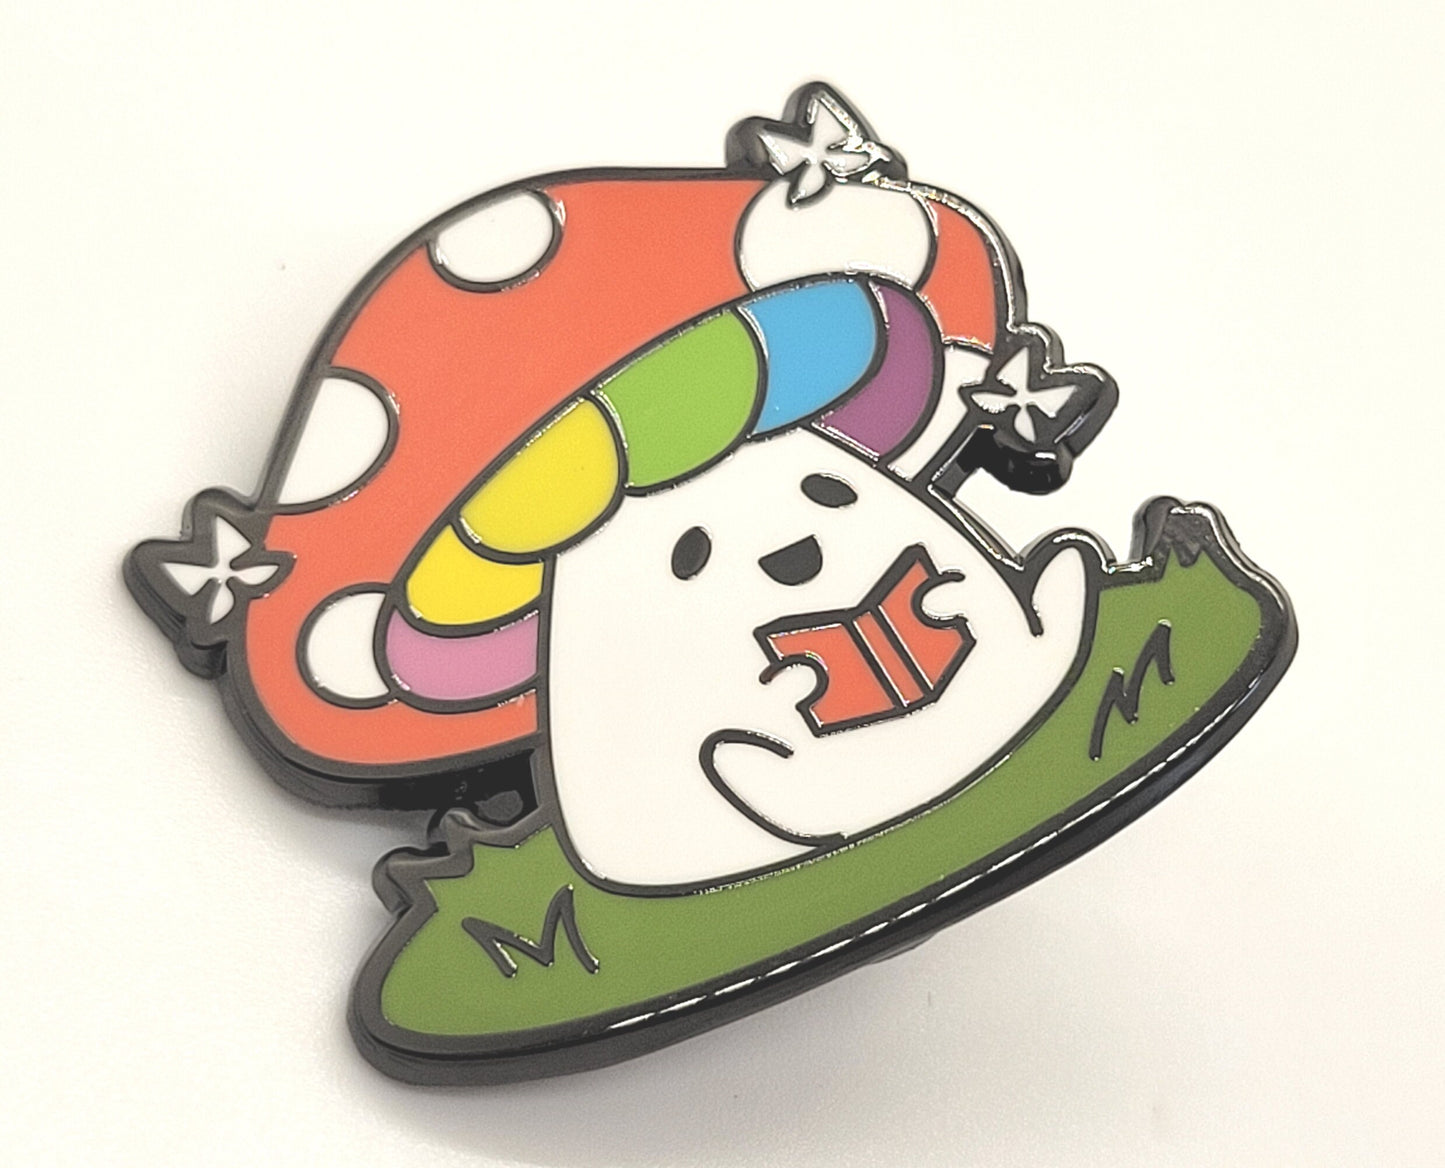 Adorable Mushroom LGBTQ Pride Pin Hard Enamel with Rainbow Pride Flag Colors | Subtle Gay Pin | *FREE SHIPPING*